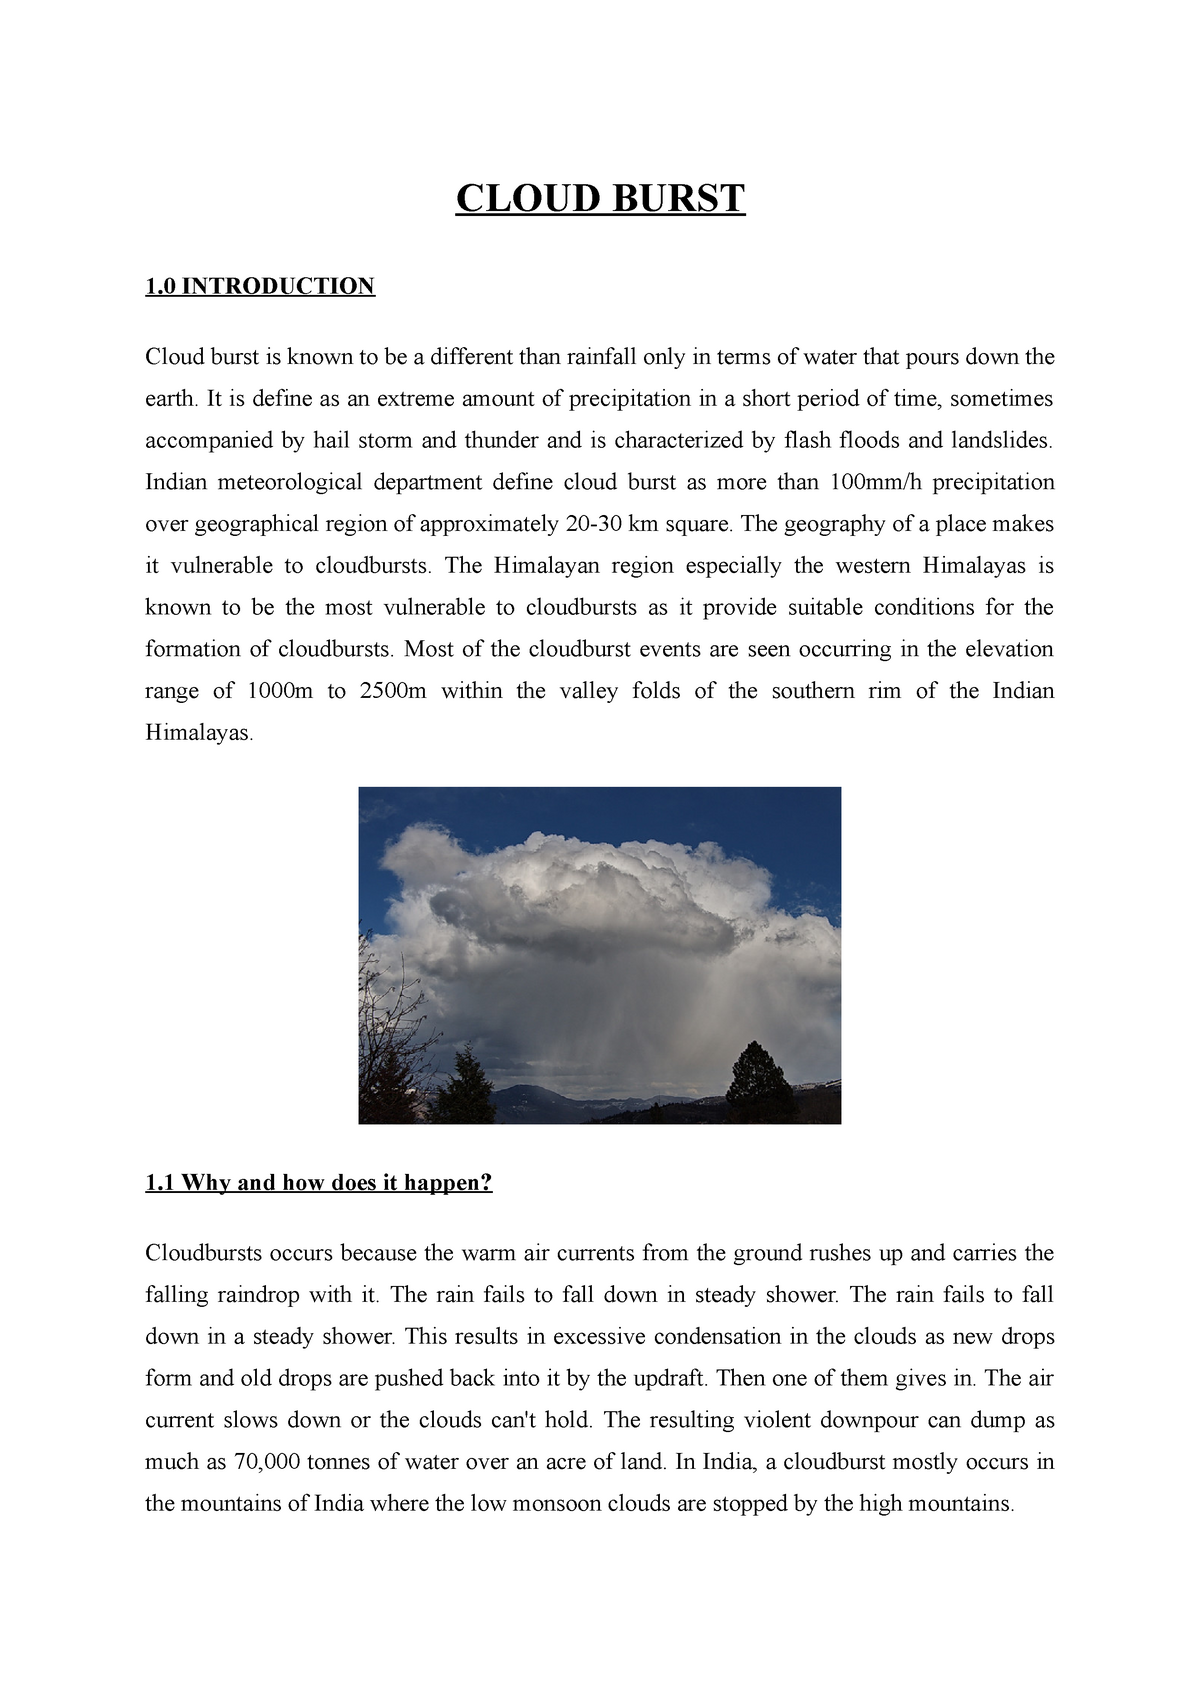 What is Cloud Bursting?